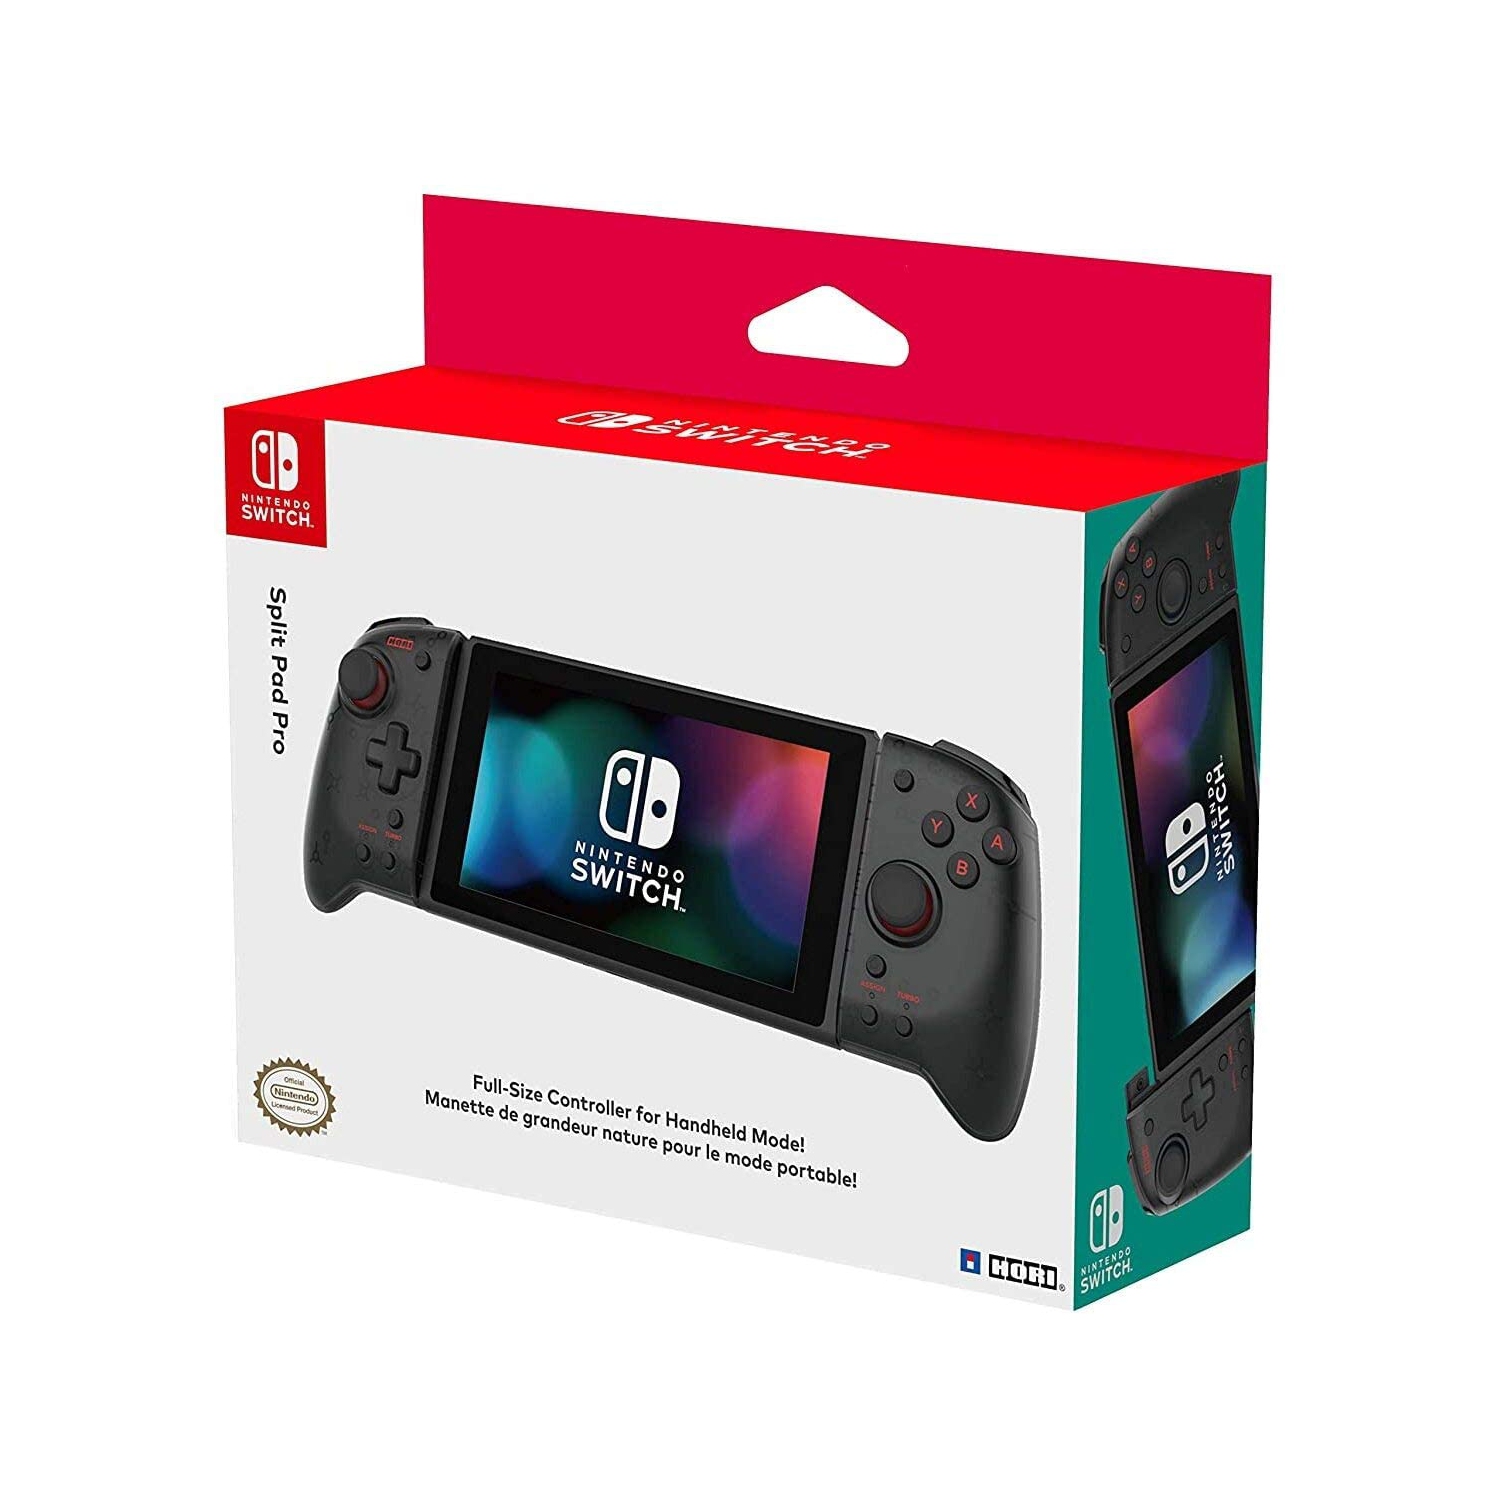 HORI Nintendo Switch Split Pad Pro (Black) Ergonomic Controller for Handheld Mode by HORI, Officially Licensed By Nintendo - Translucent Black